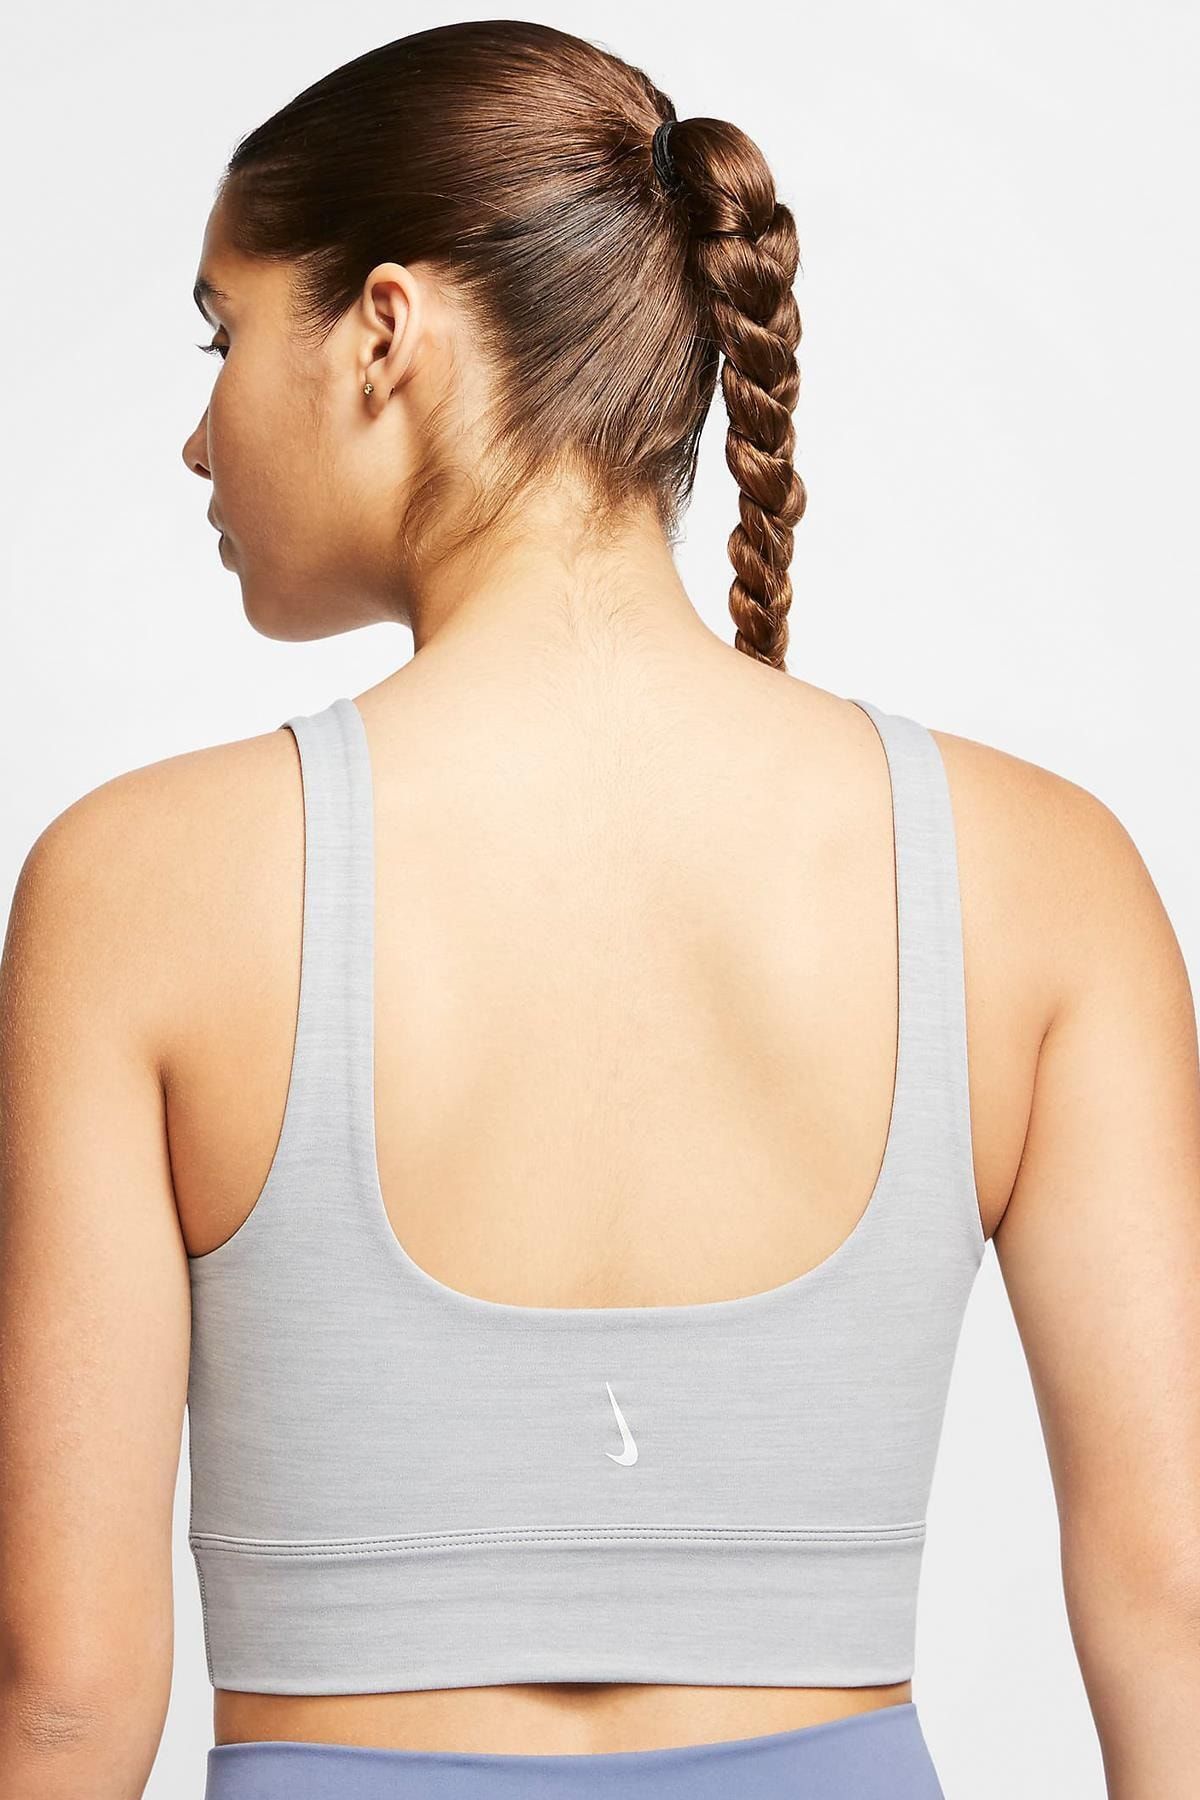 Nike Yoga Luxe Women's Sports Athlete - Trendyol